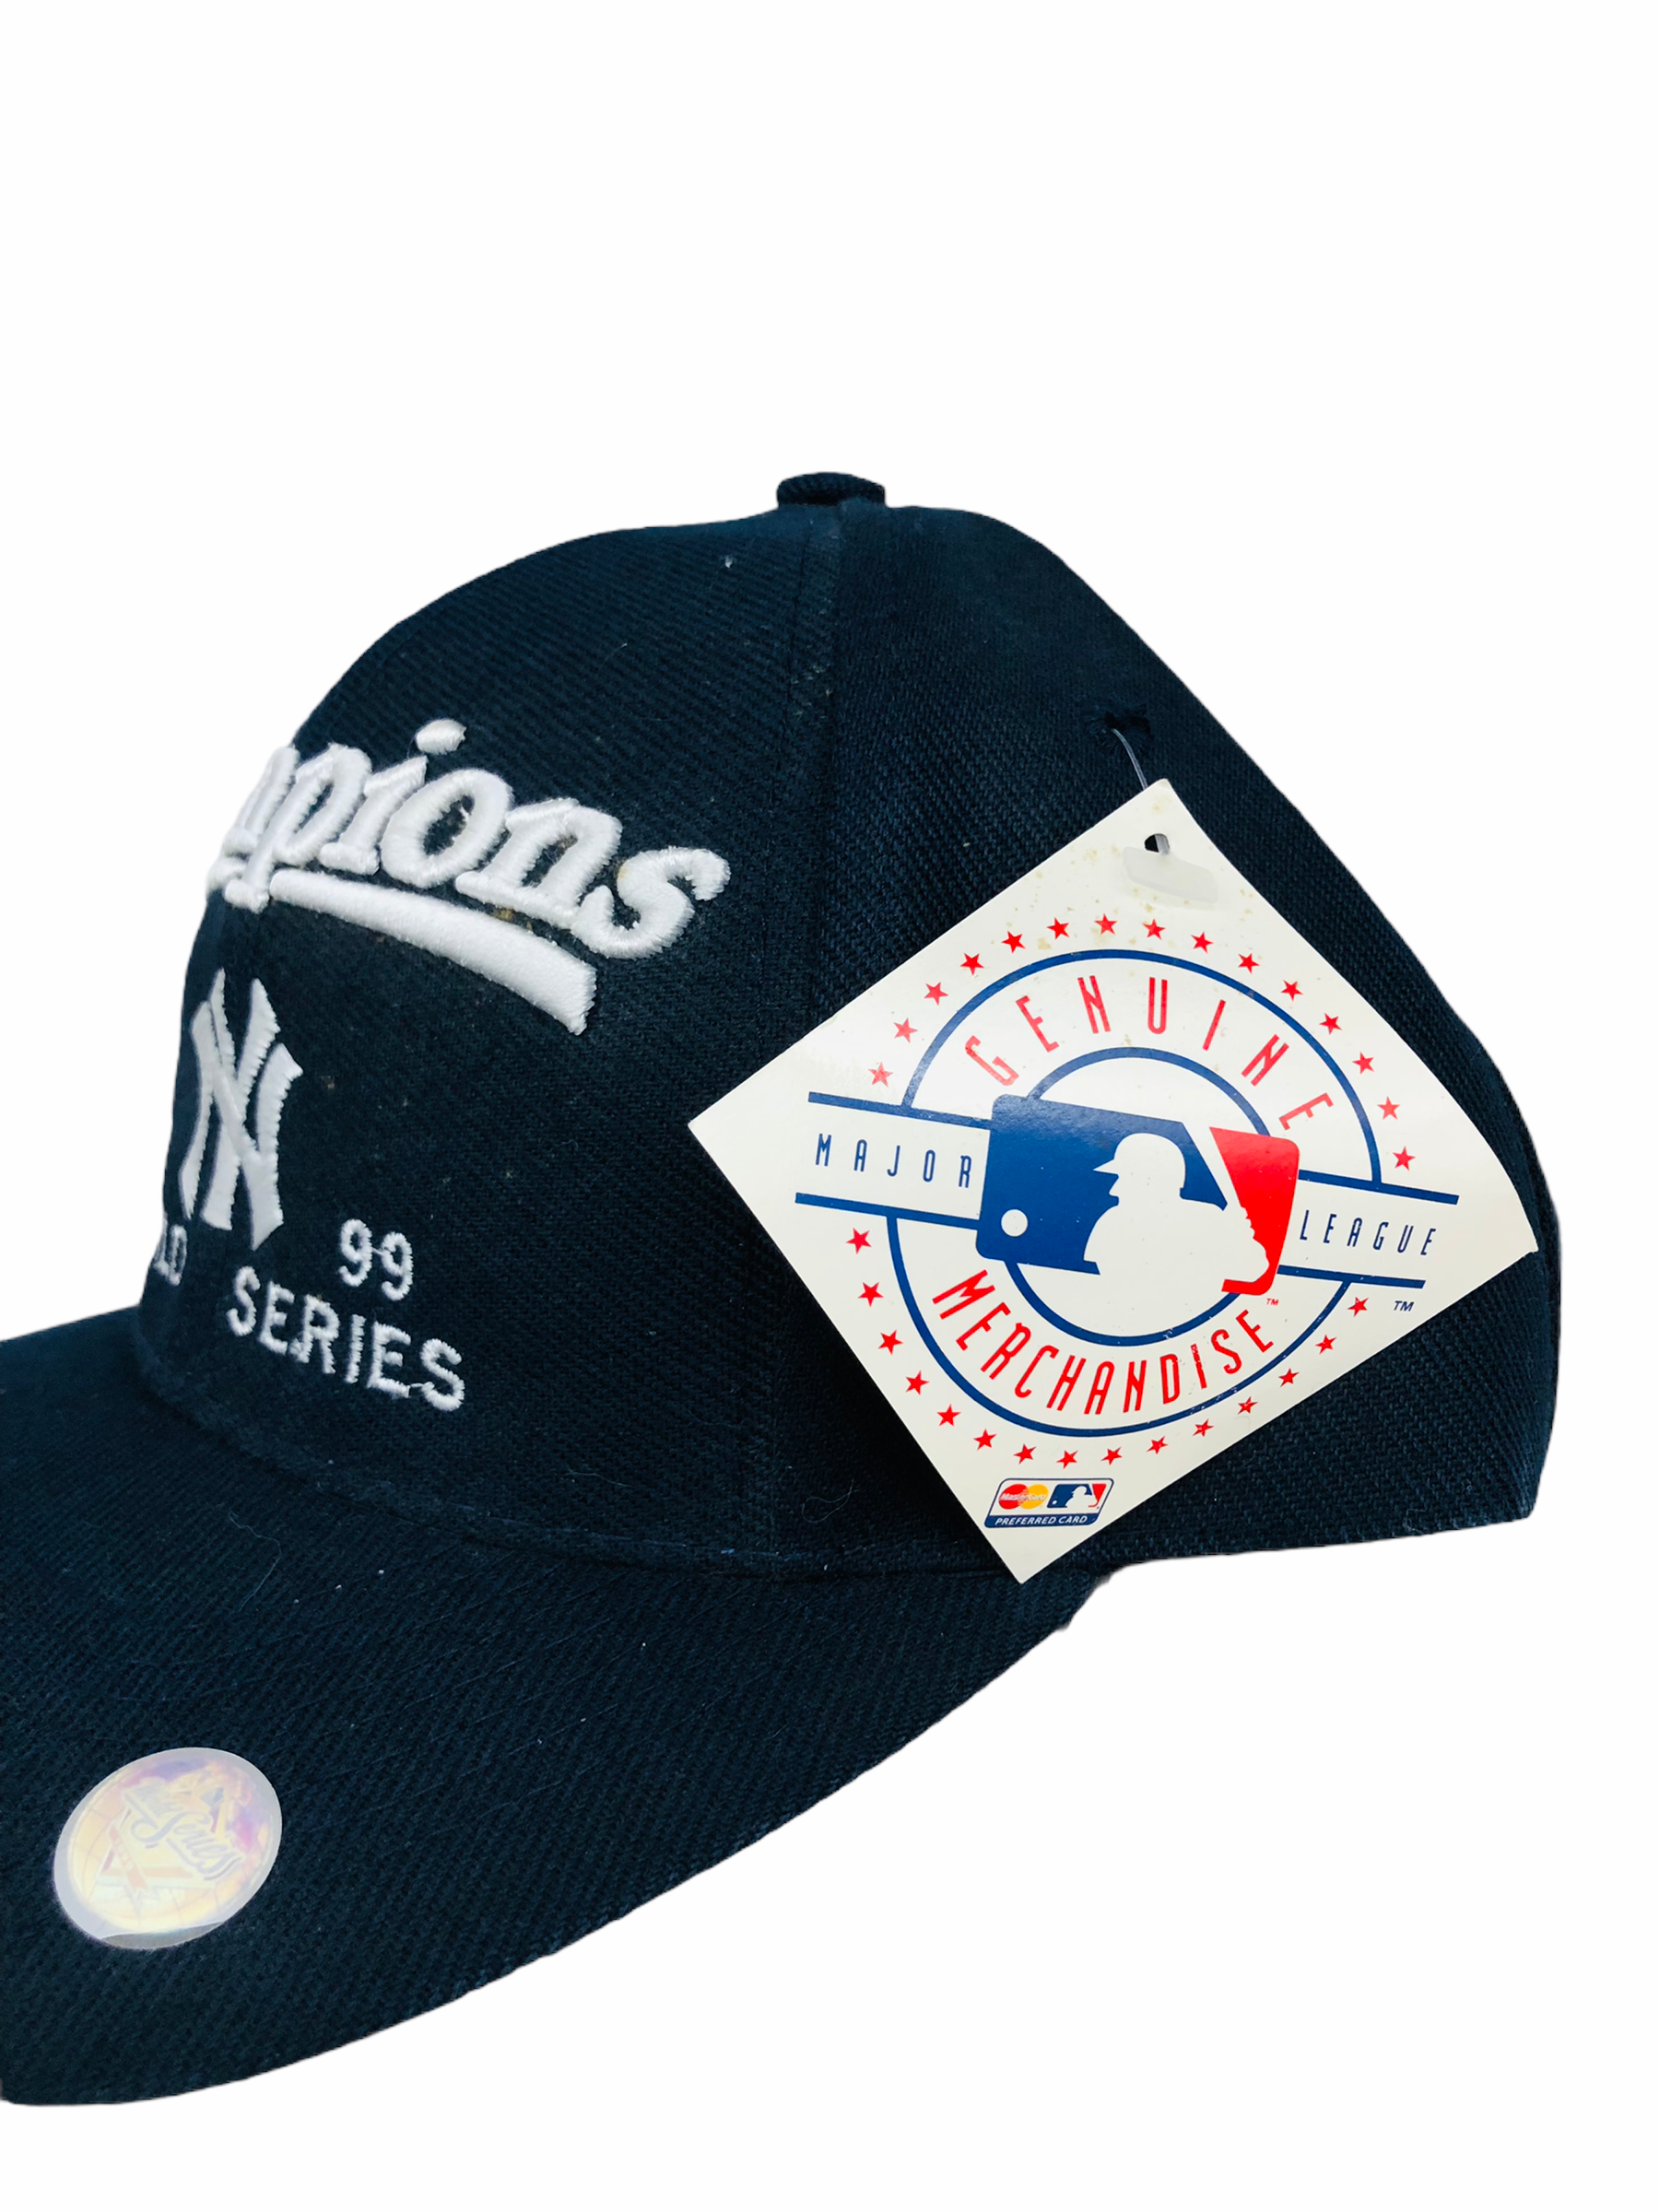 00' World Series Champions New York Yankees Champions Vintage T-Shirt